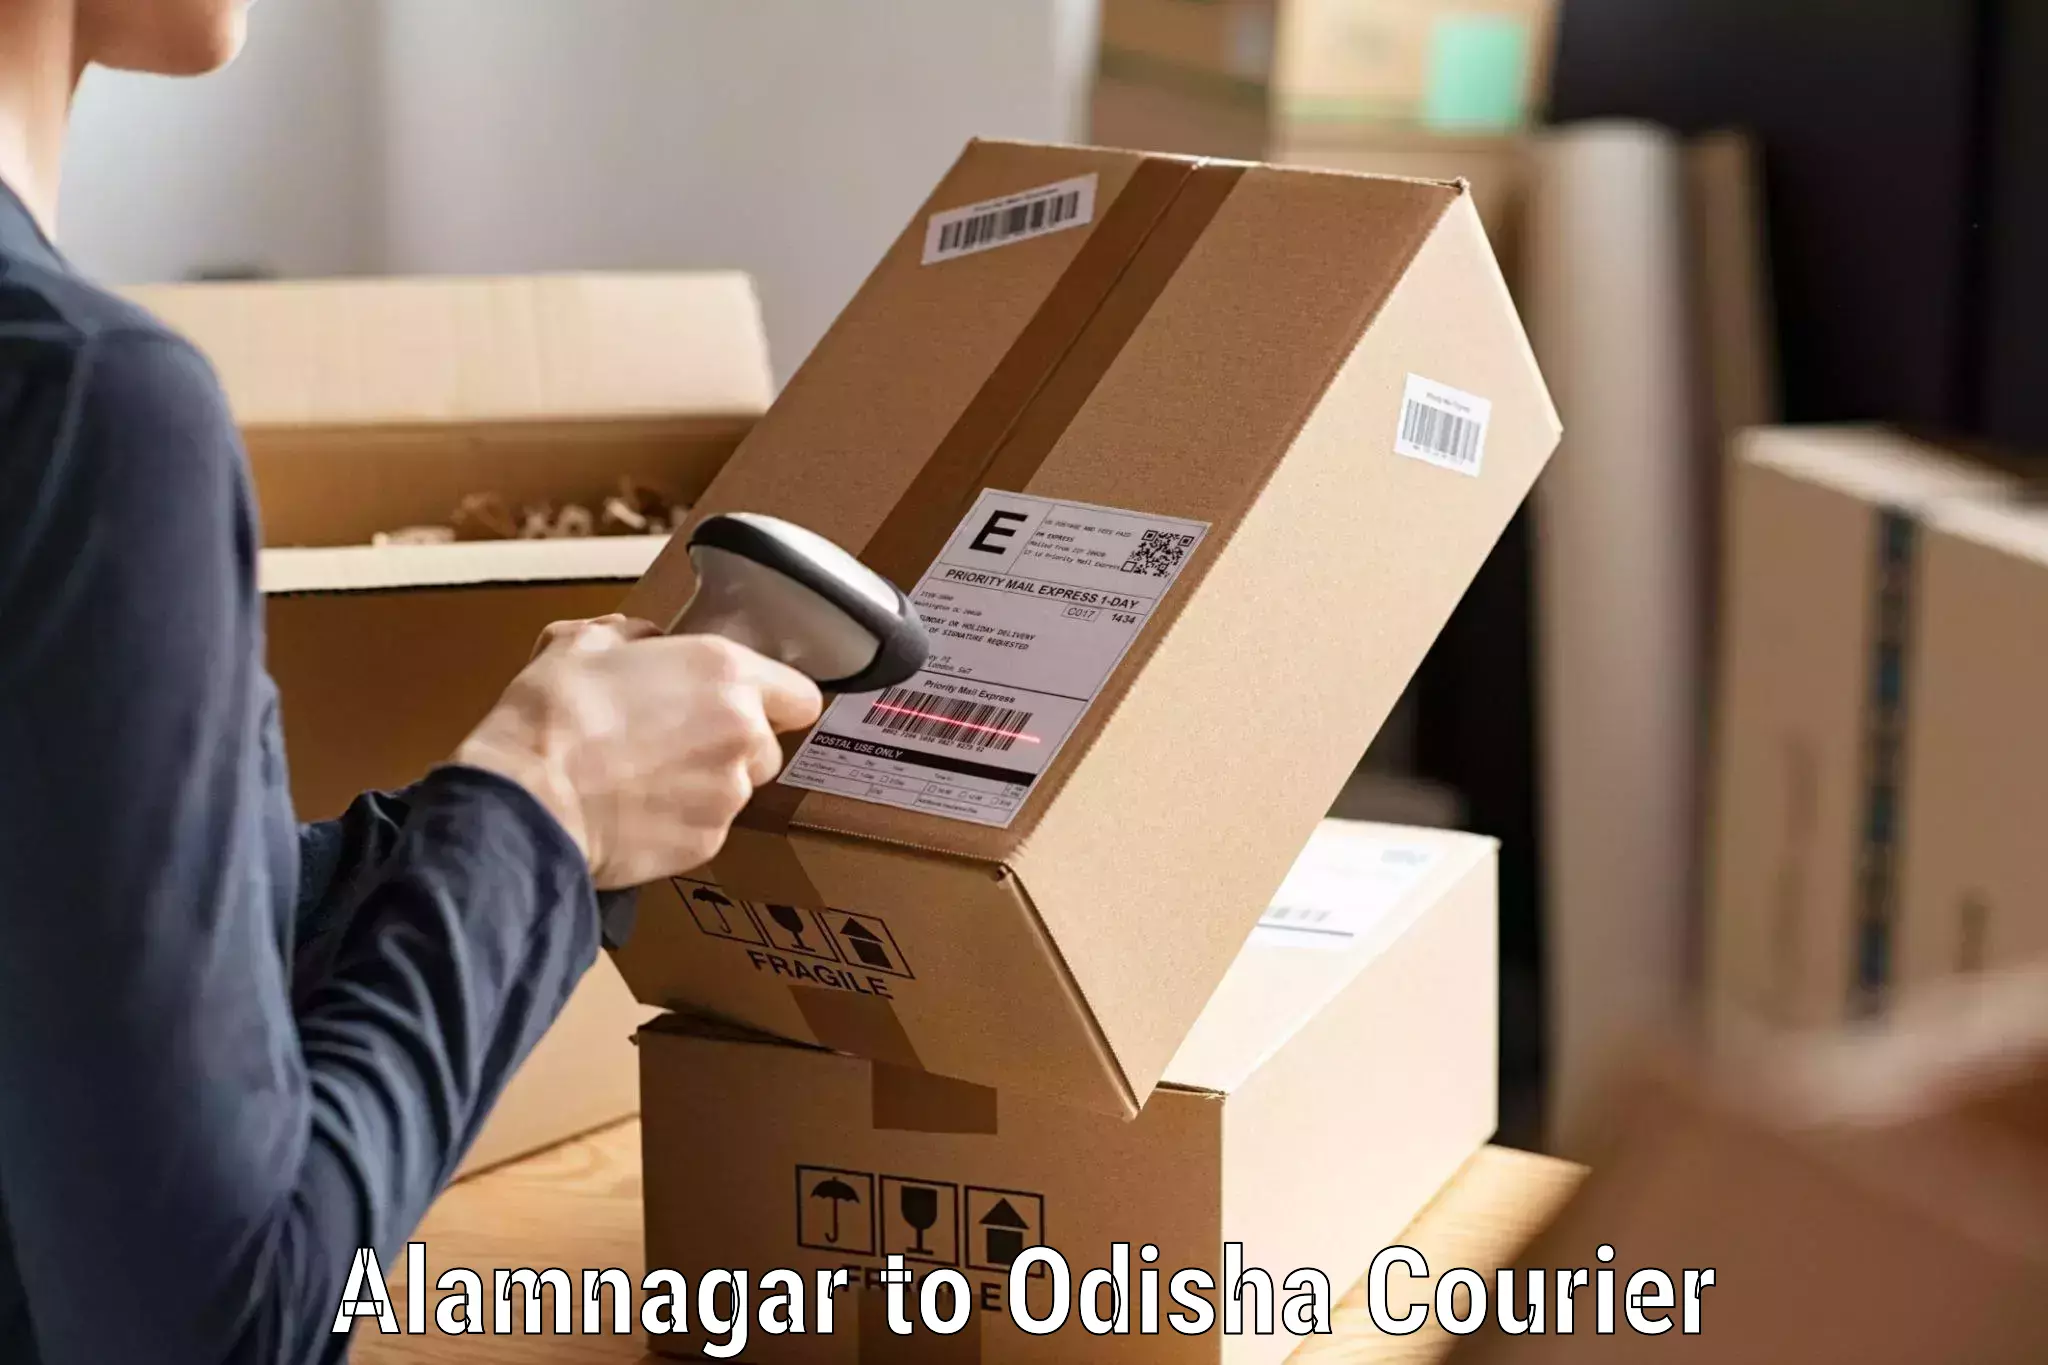 Courier service booking in Alamnagar to Baleswar